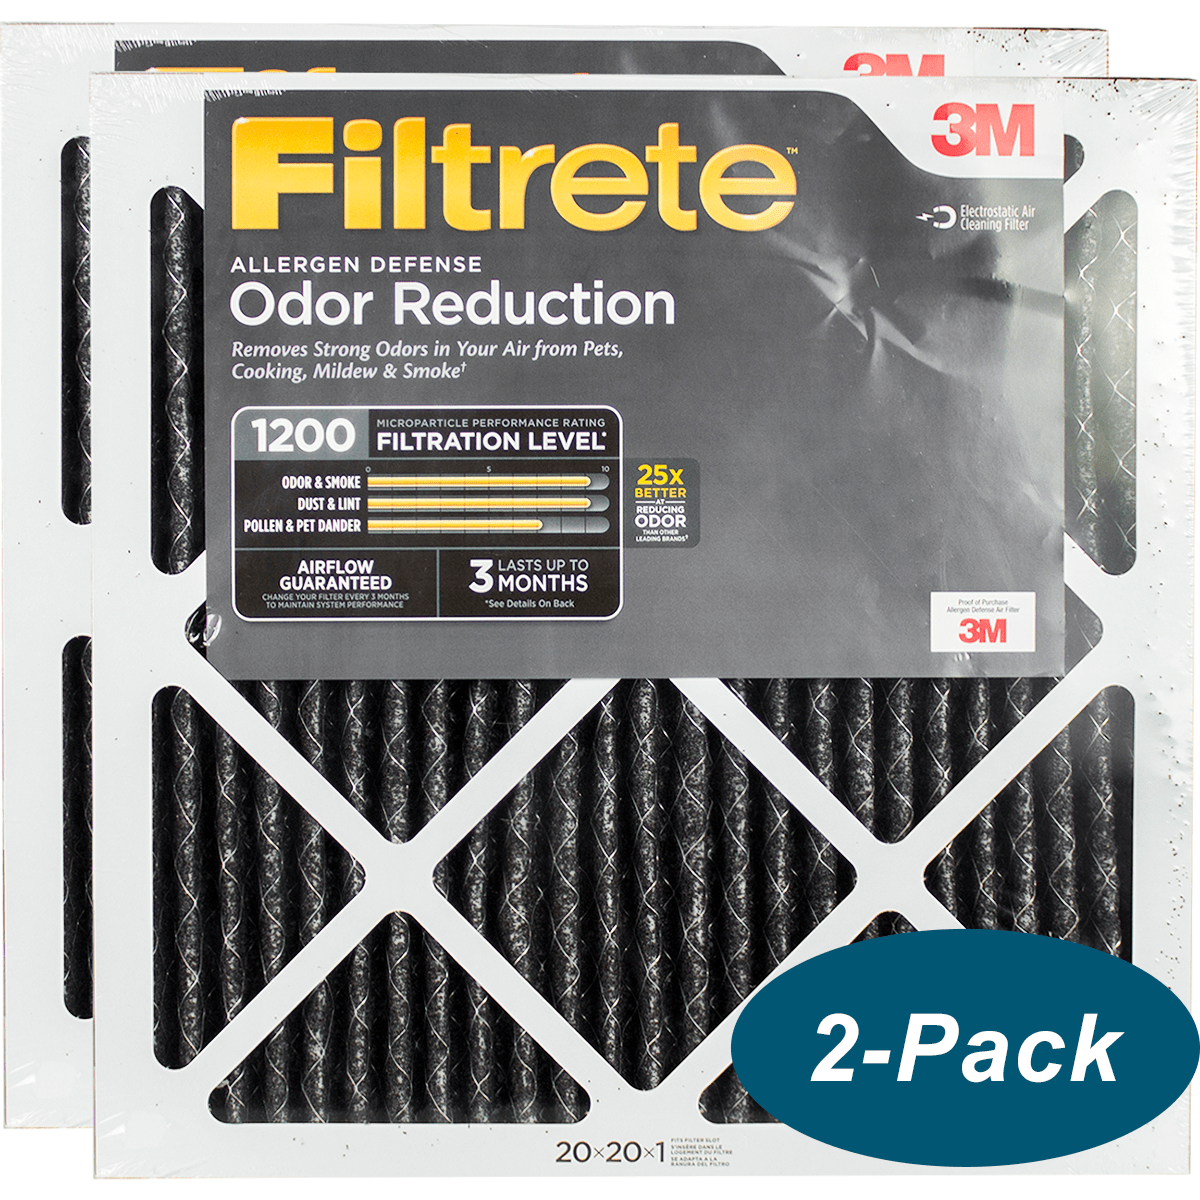 3M Filtrete 1200 MPR Allergen Defense Odor Reduction Filters 20x20x1 2-PACK